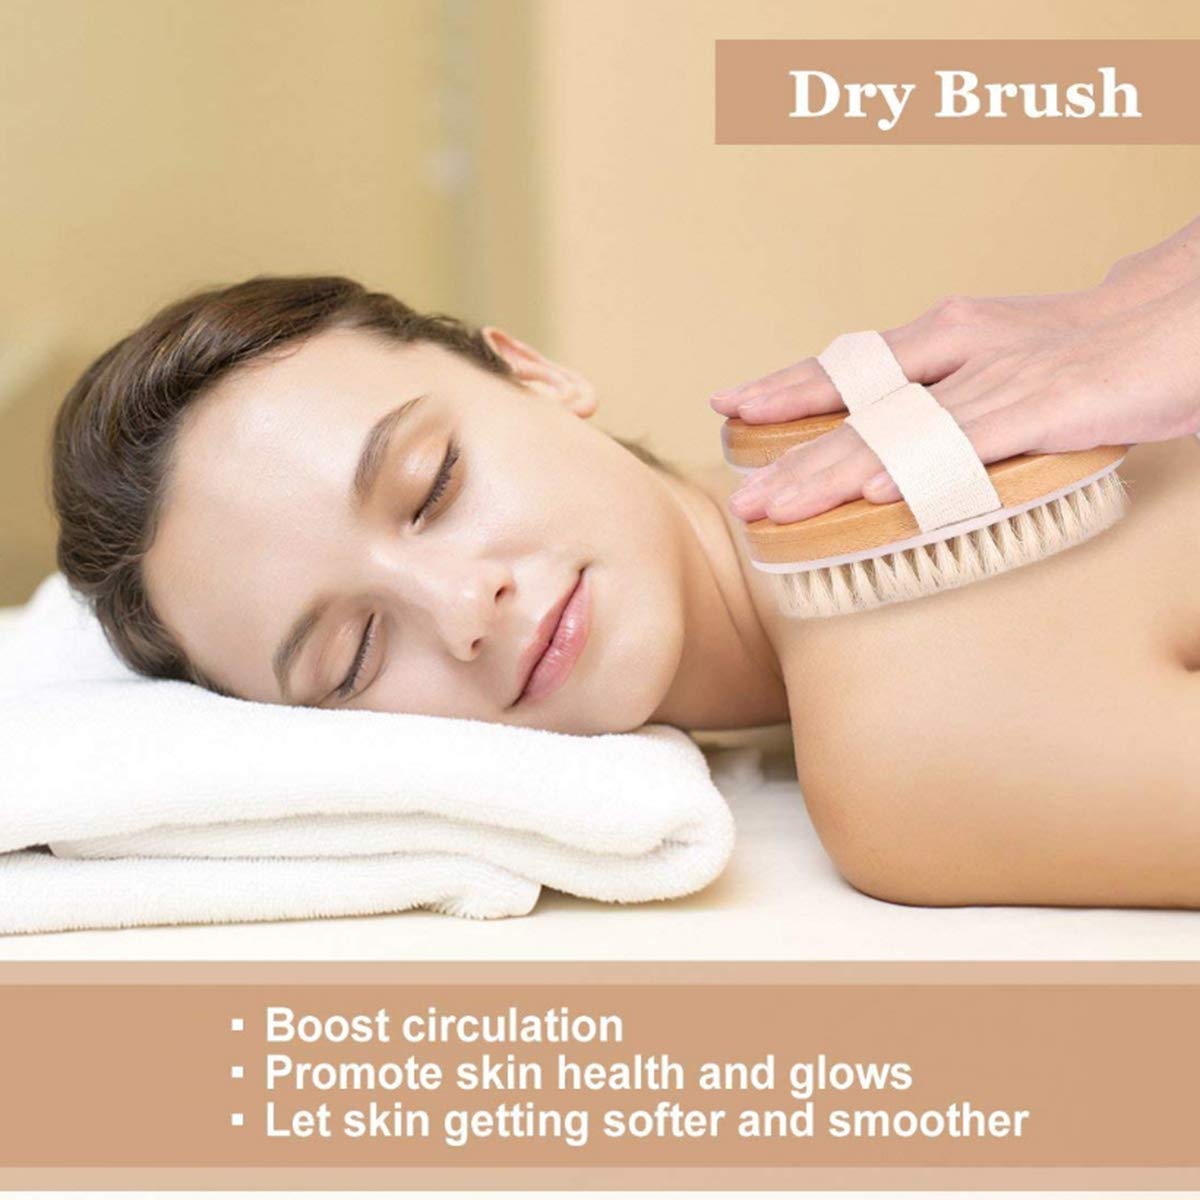 Dry Brushing Body Brush, Natural Bristle Dry Skin Exfoliating Brush Body Scrub for Beautiful Skin, Cellulite Treatment, Lymphatic Drainage, Soften Skin, Blood Circulation Improvement, Medium Strength